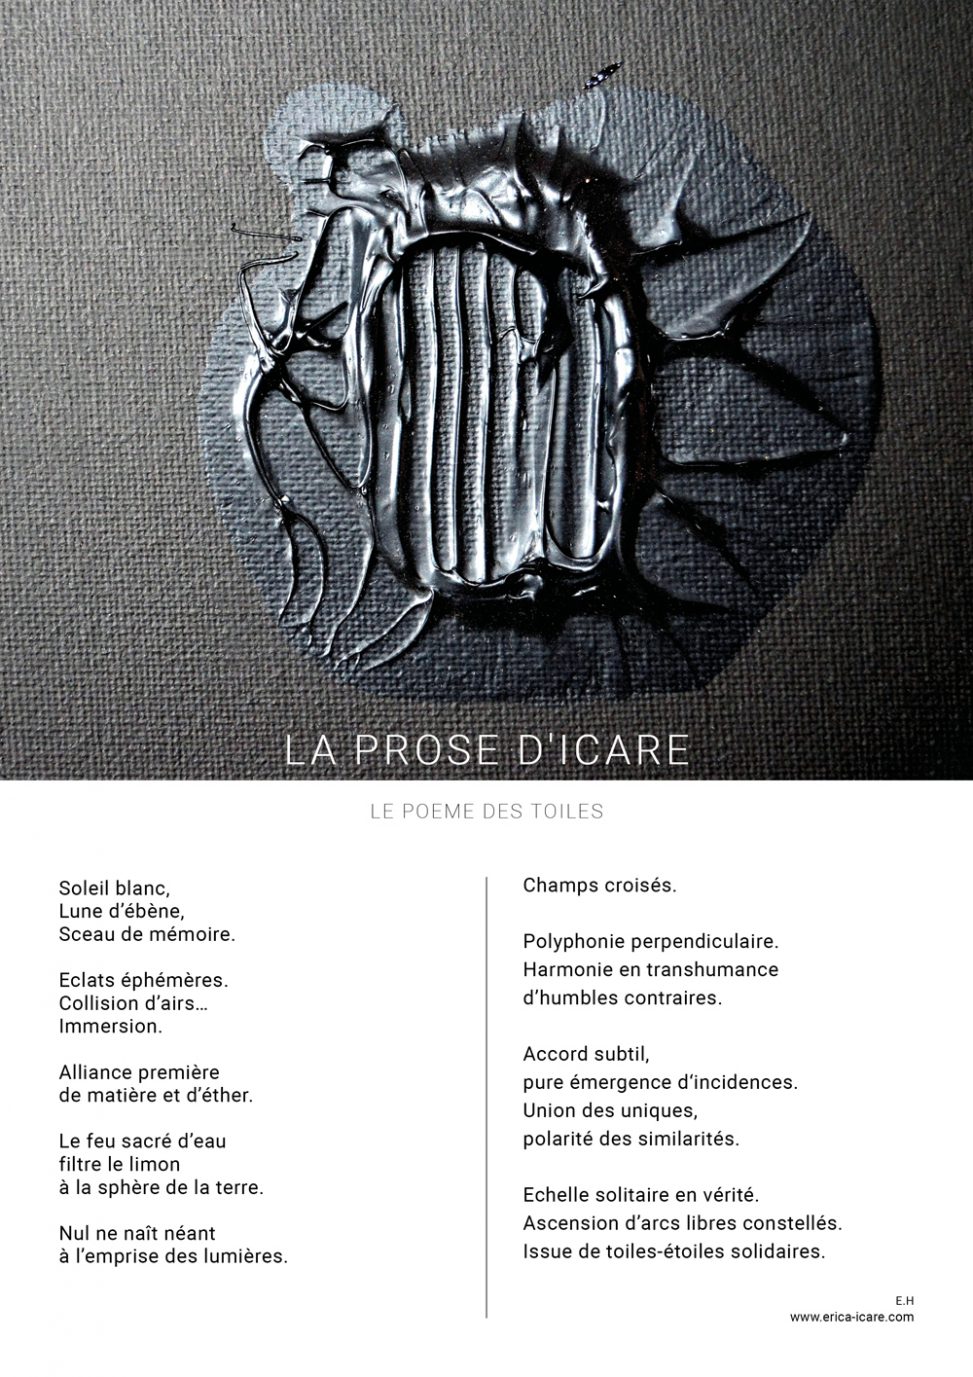 Black imprint - Poêsis, poïein Icarus - solidarity poetry - poetry - Poème Icare - La prose d’Icare, Erica Hinyot www.erica-icare.com